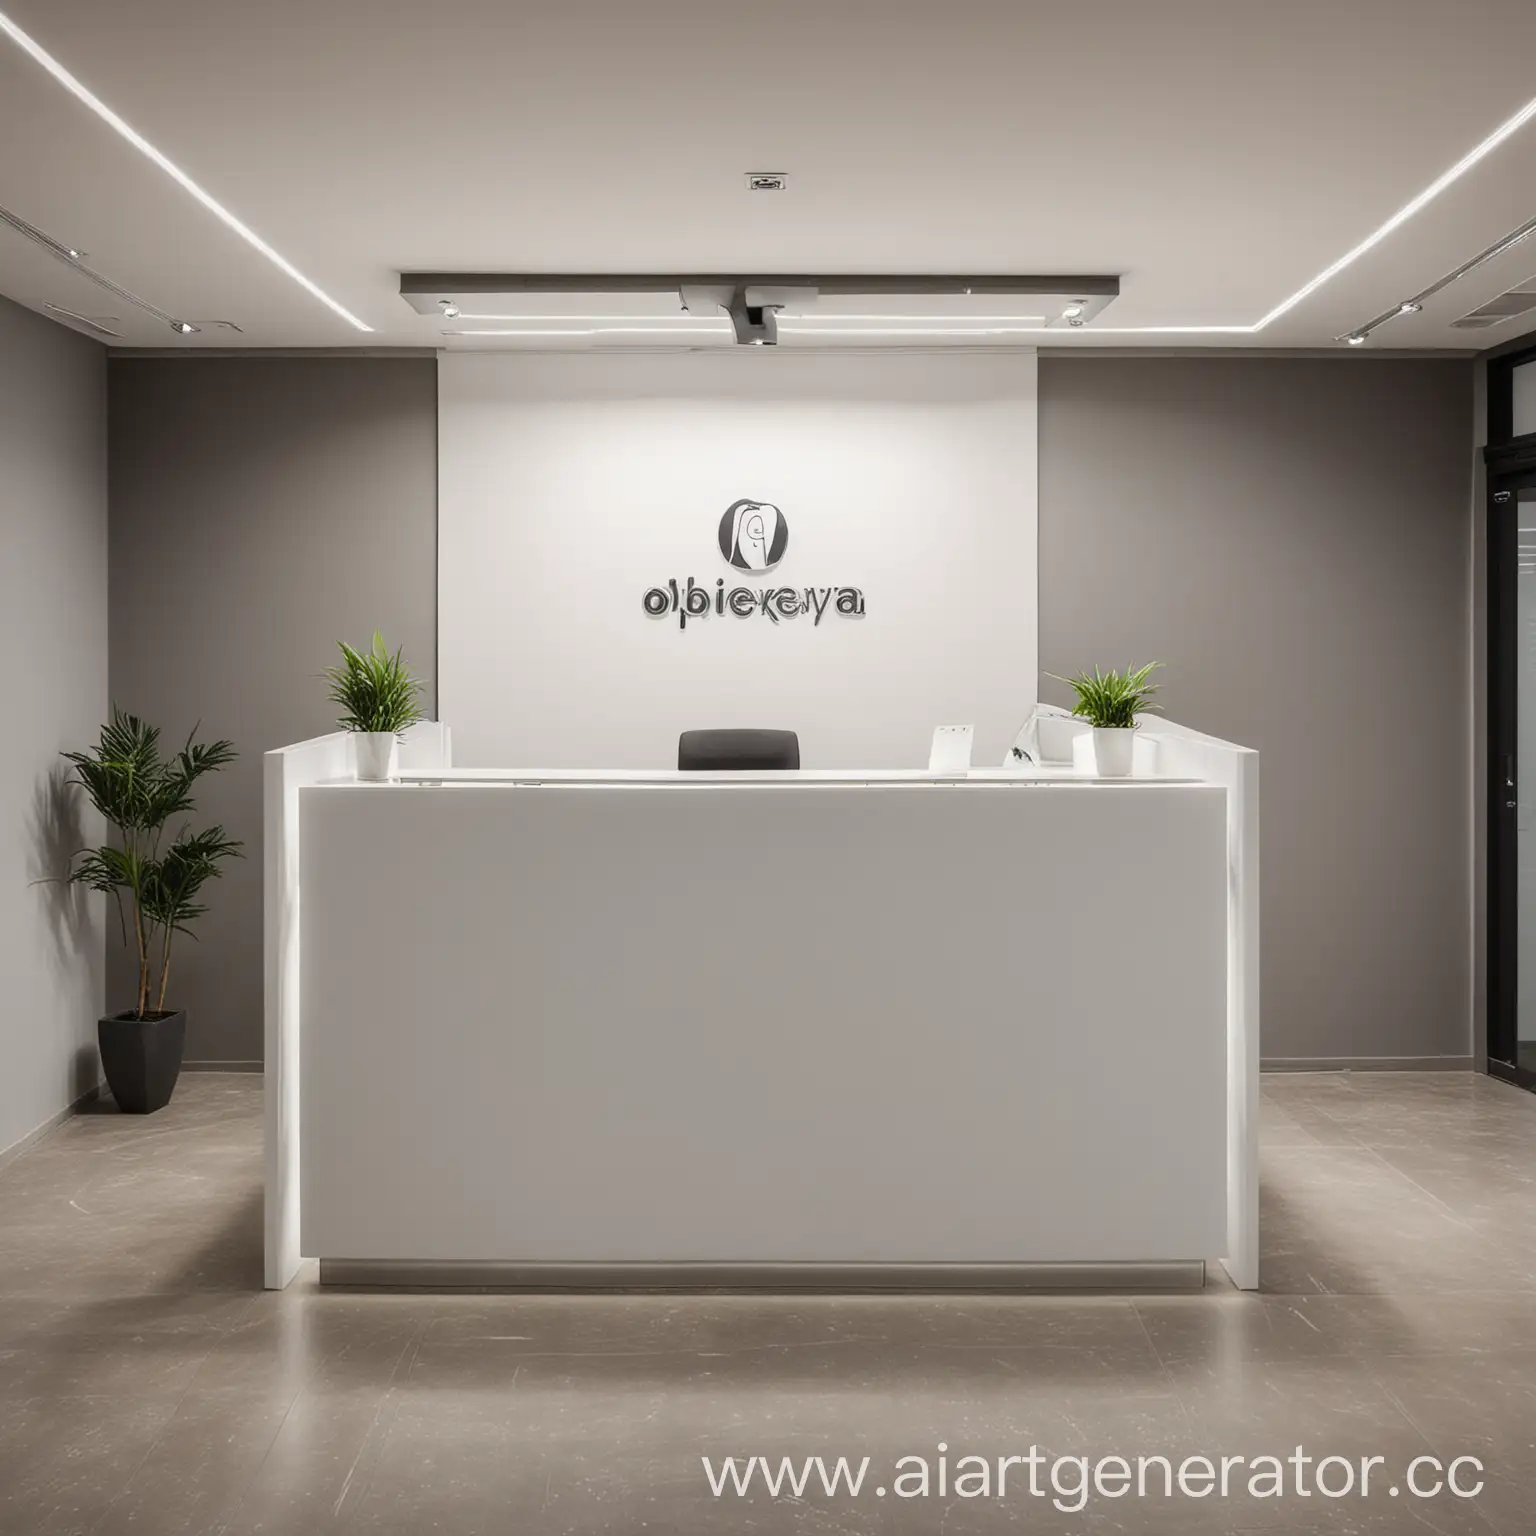 Modern-Office-Reception-Desk-with-Clean-White-Design